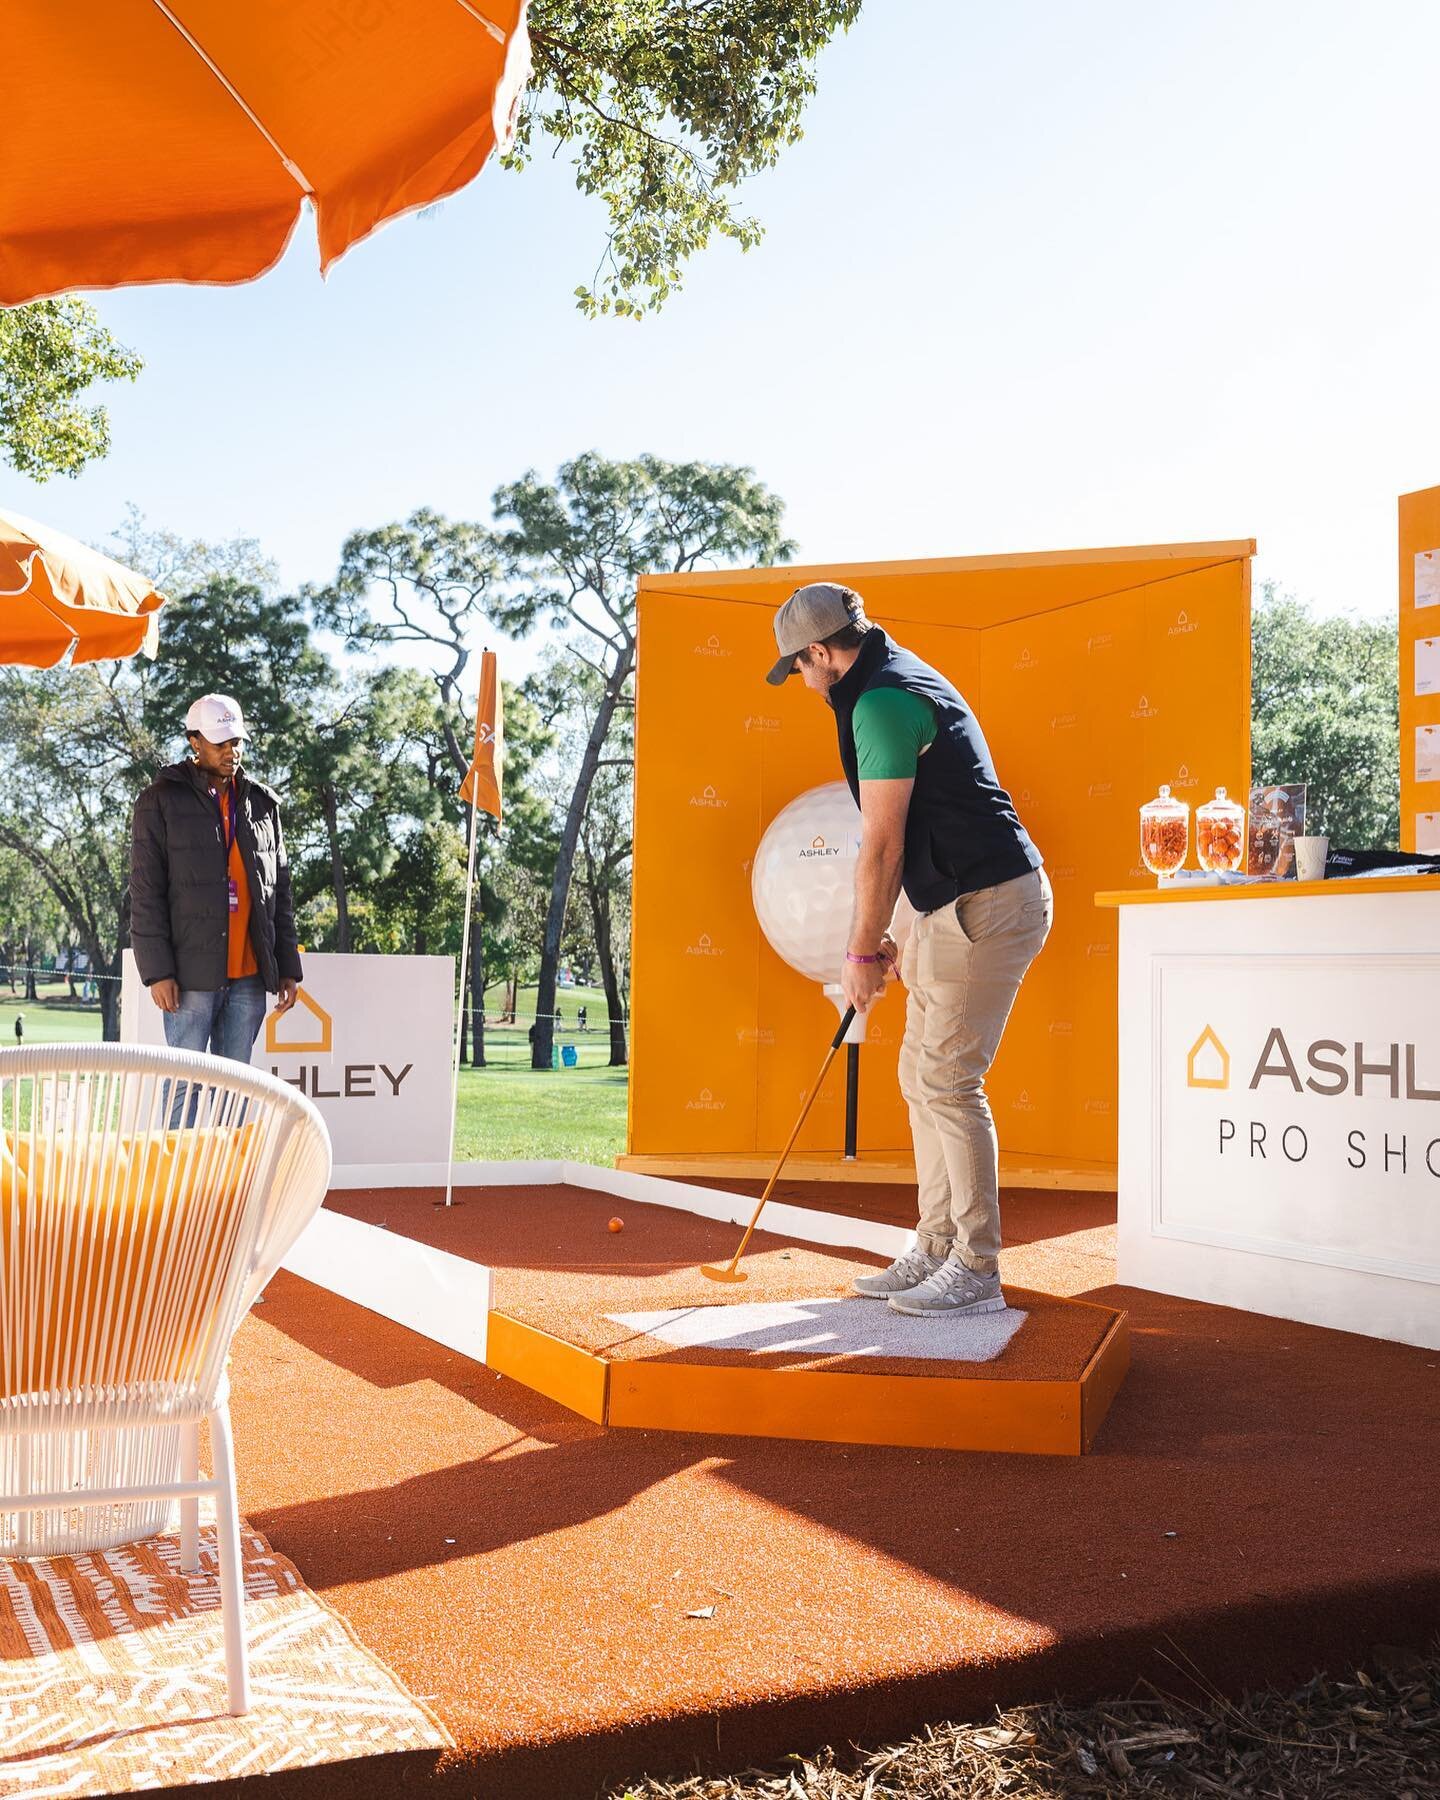 The @ashleyofficial Lounge at @valsparchamp ⛳️ 
&mdash;&mdash;&mdash;
📷 @arcilect 
&mdash;&mdash;&mdash;
#oroeventco #ashley #pga #valspar #golf #experiential #experientialevents #eventplanner #eventdesigner